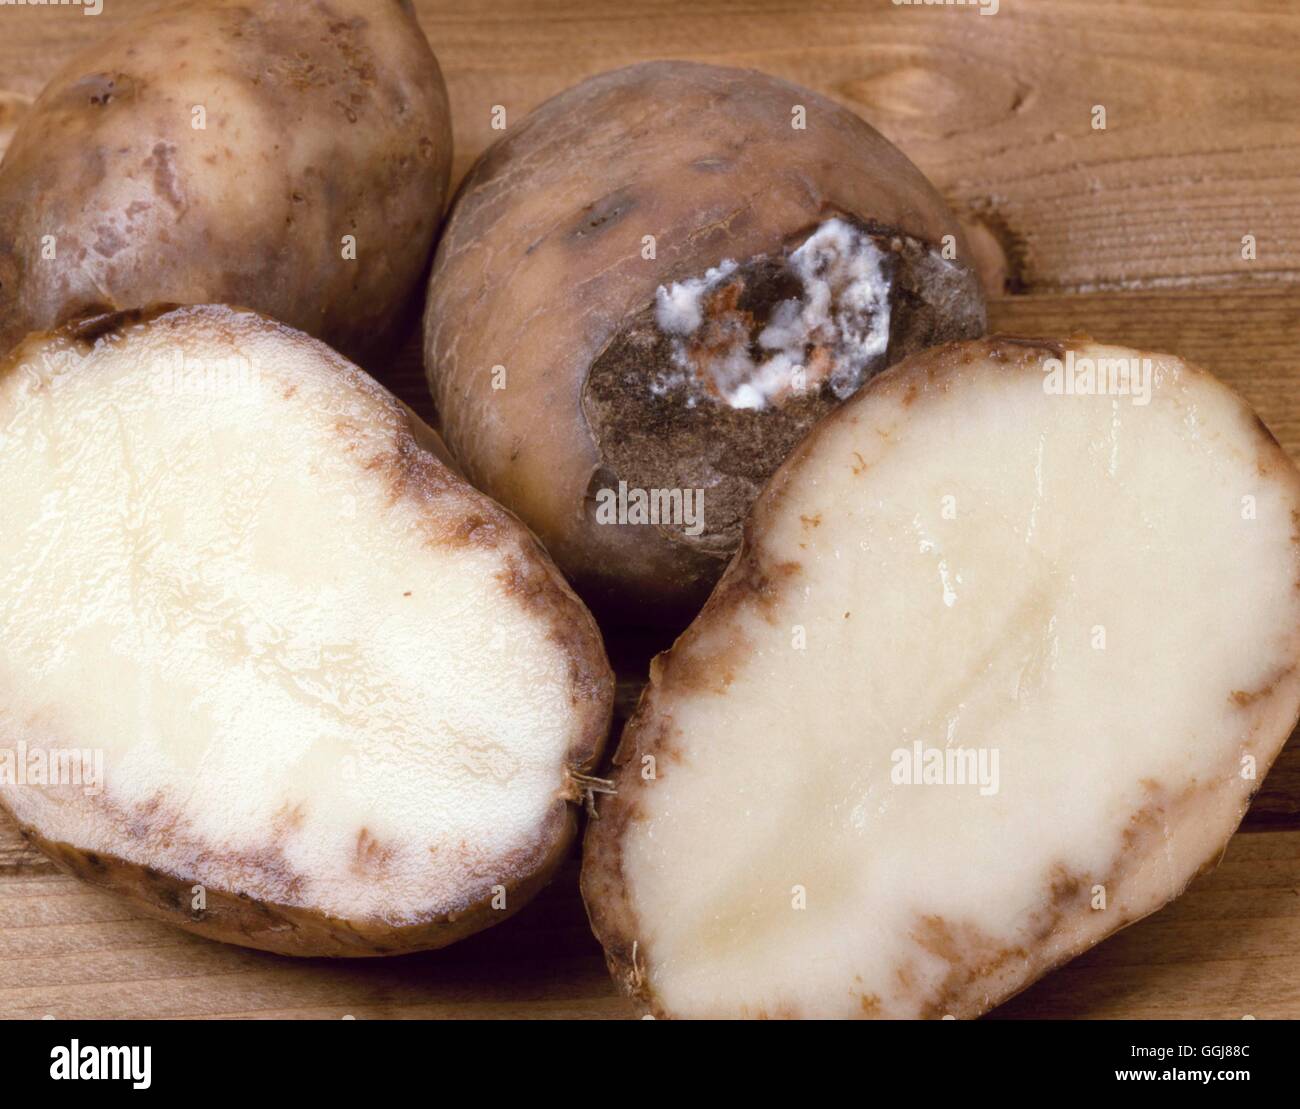 potato blight